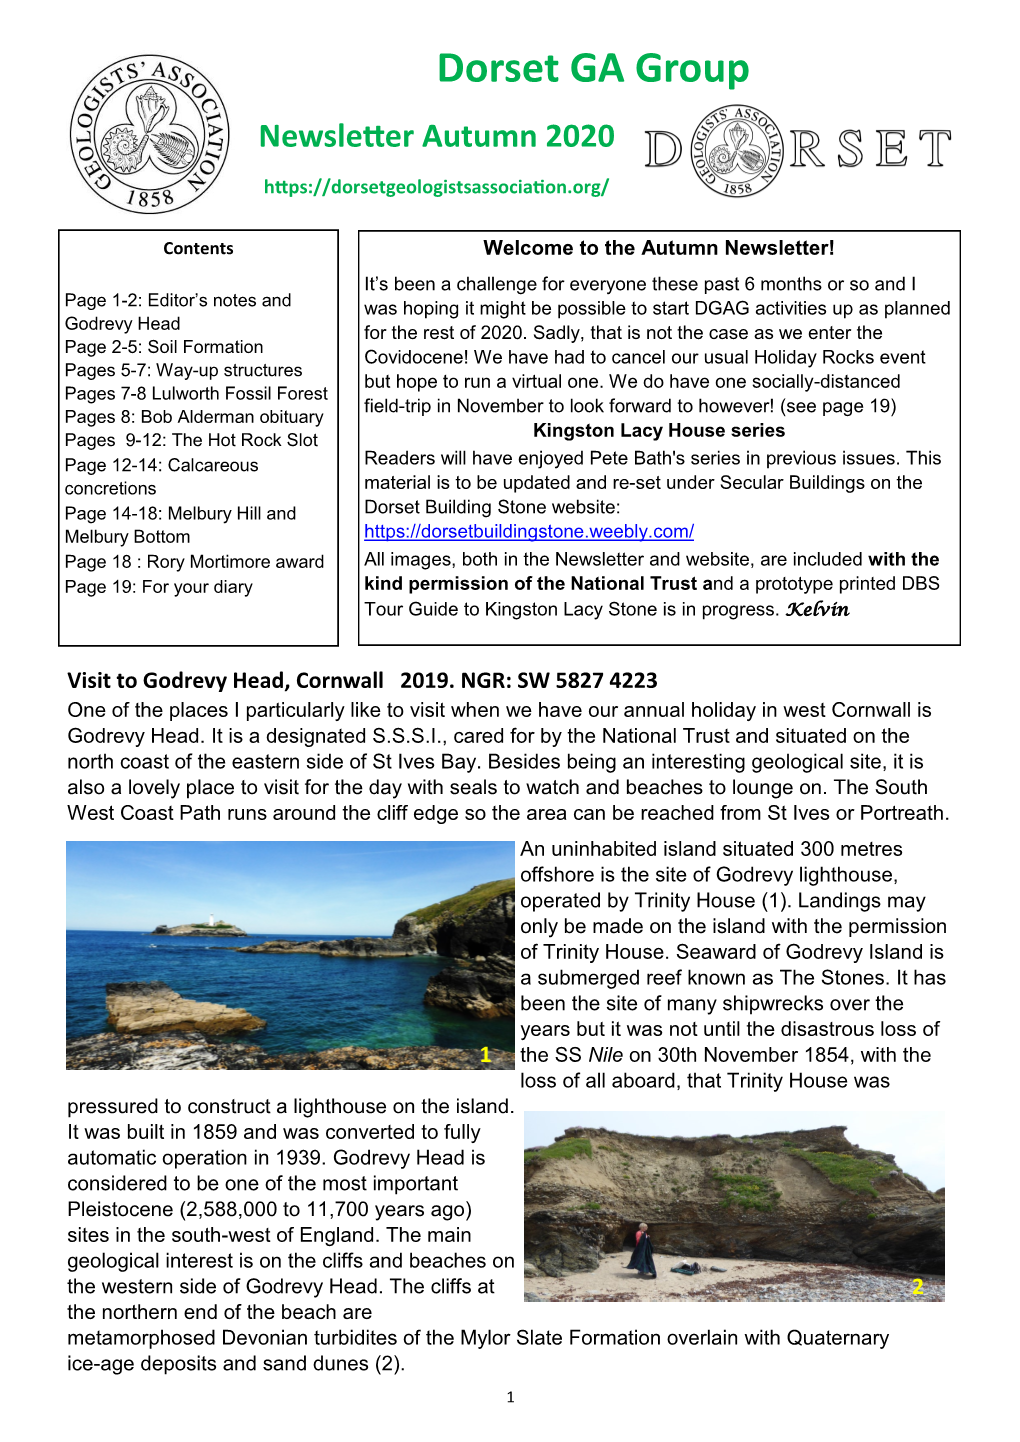 Dorset GA Group Newsletter Autumn 2020